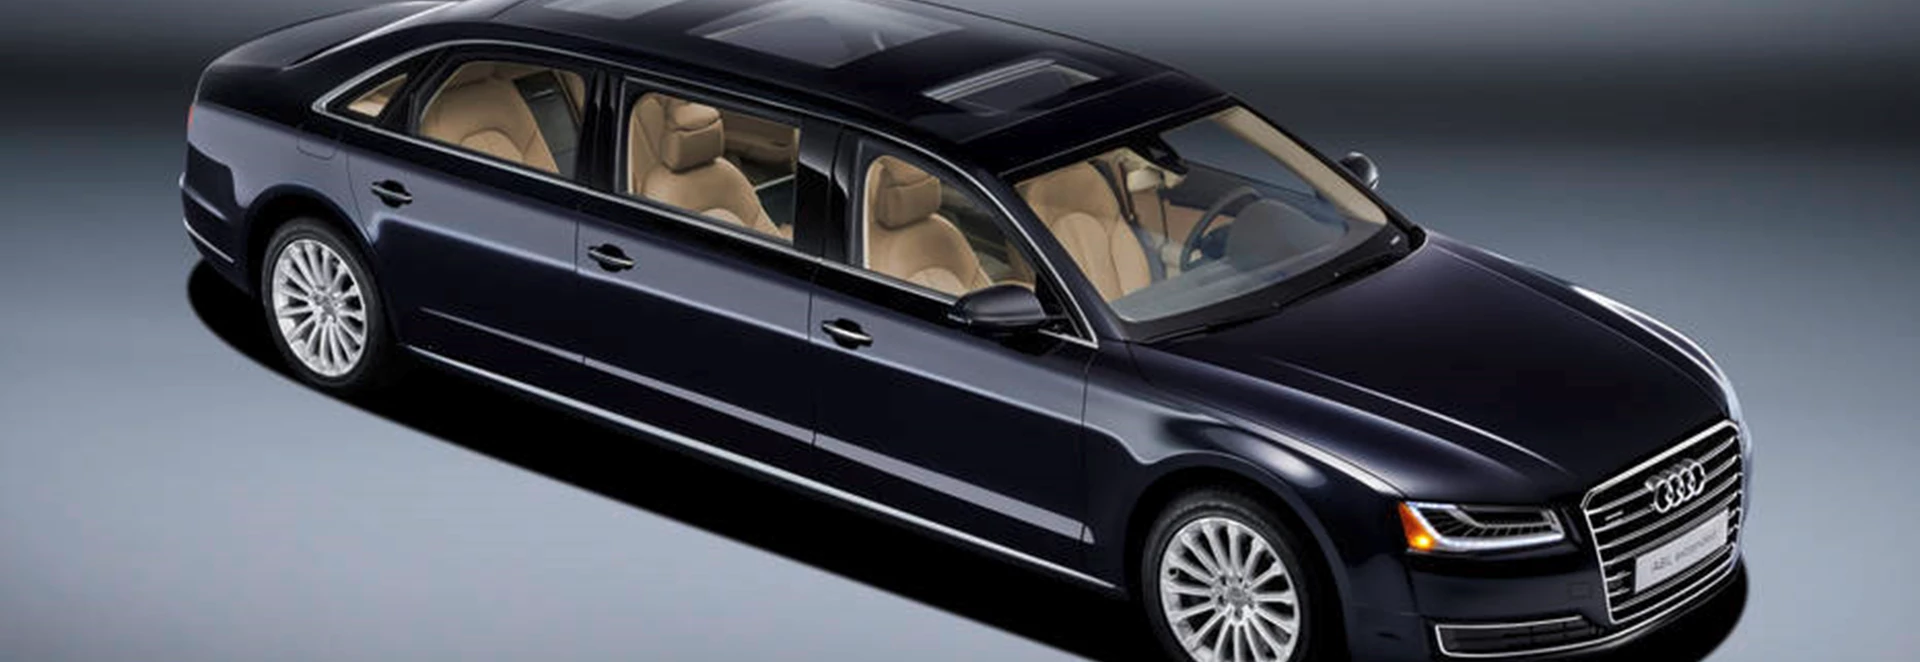 Audi transforms an A8 into six-door limousine 